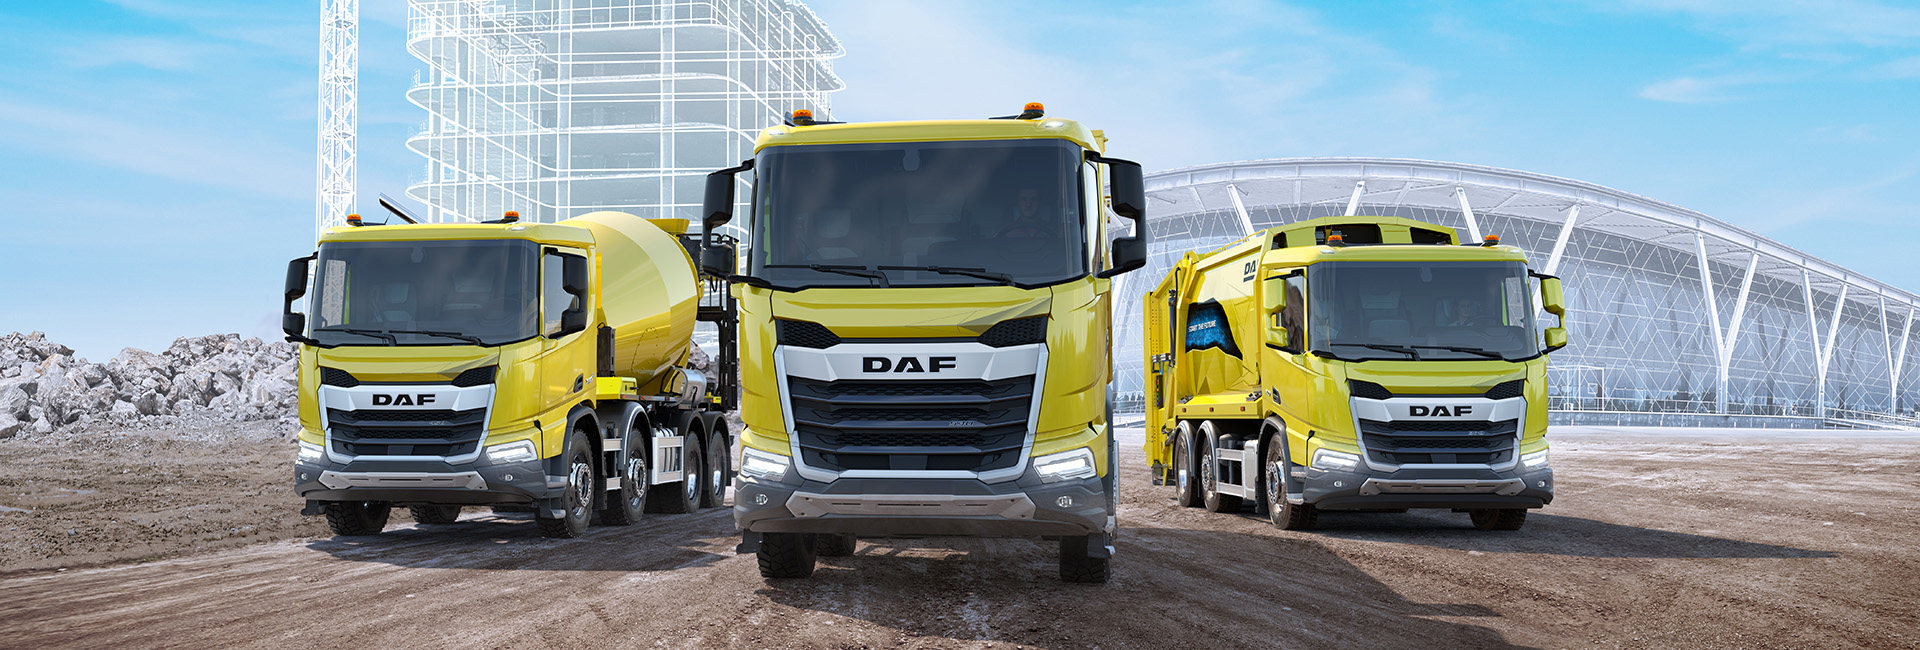 DAF XD range vocational trucks